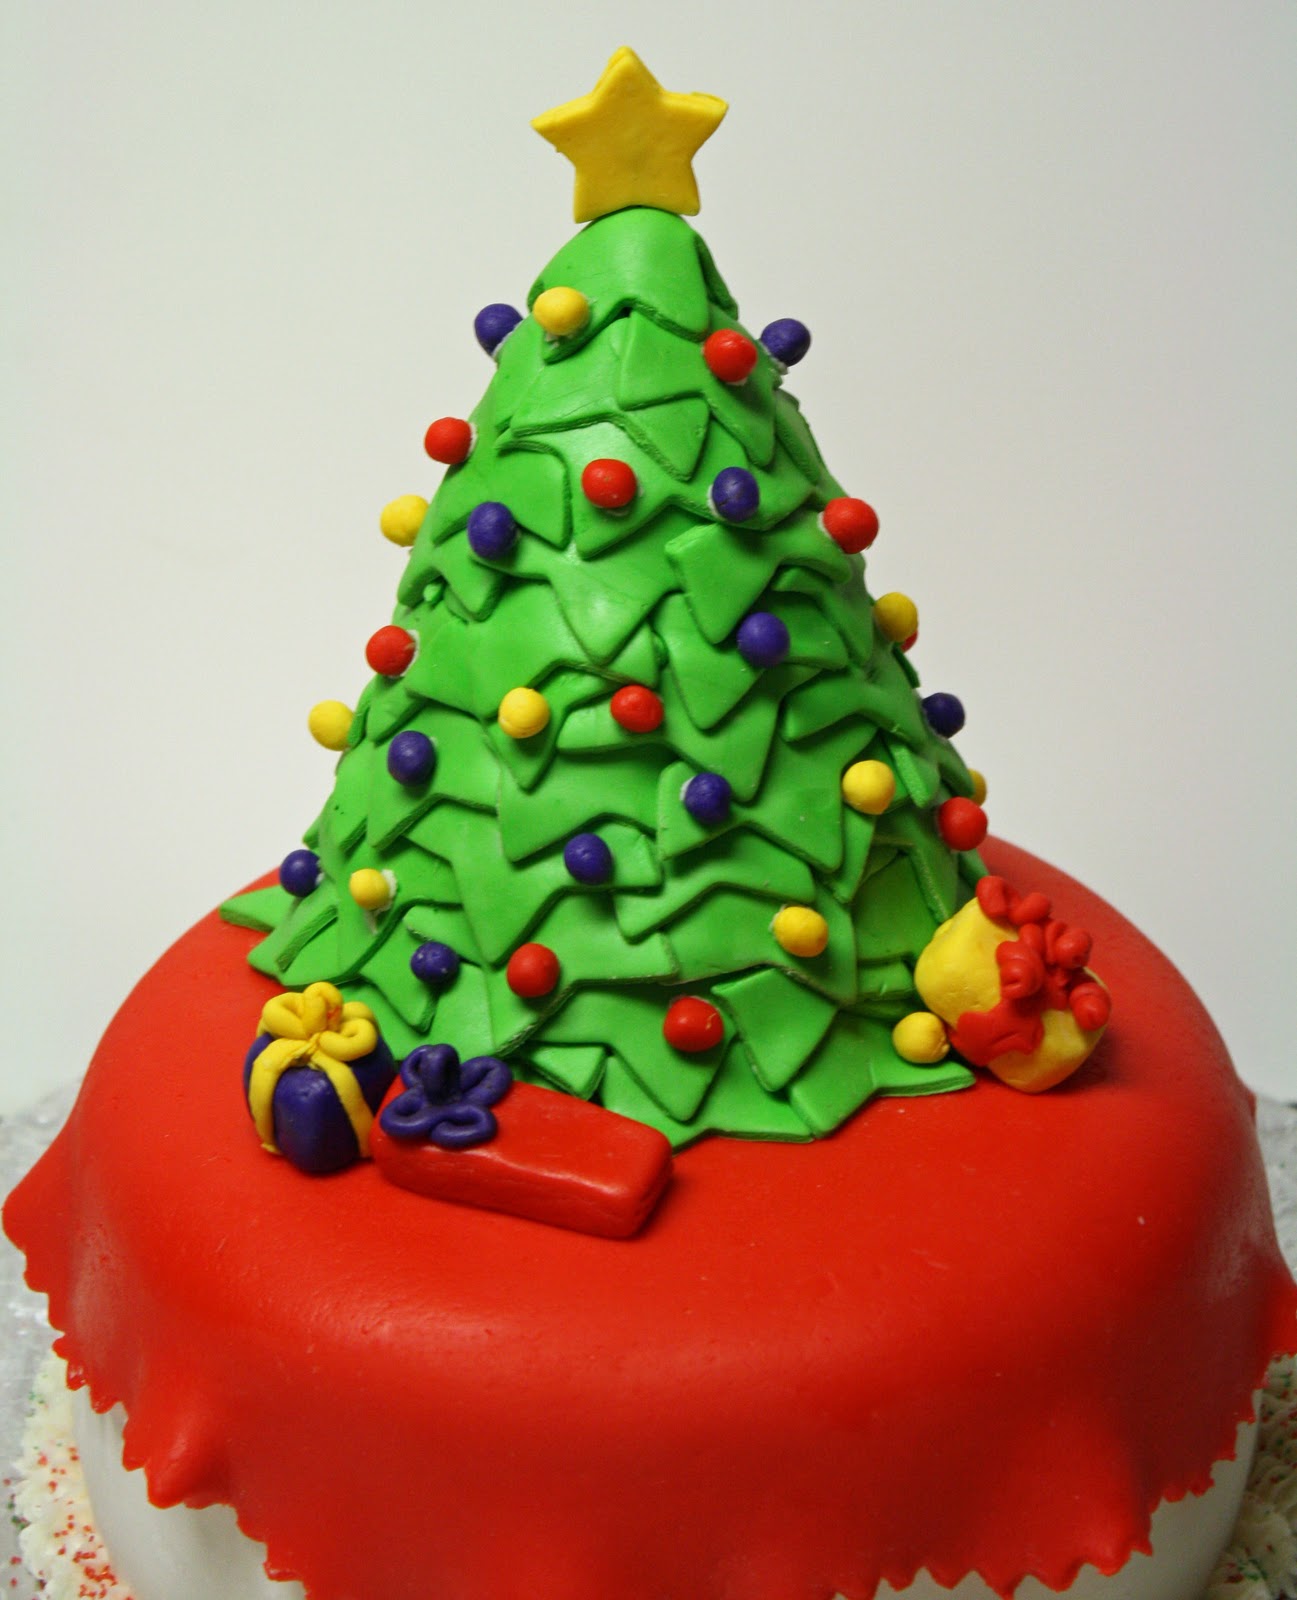 Christmas Cakes – Decoration Ideas | Little Birthday Cakes